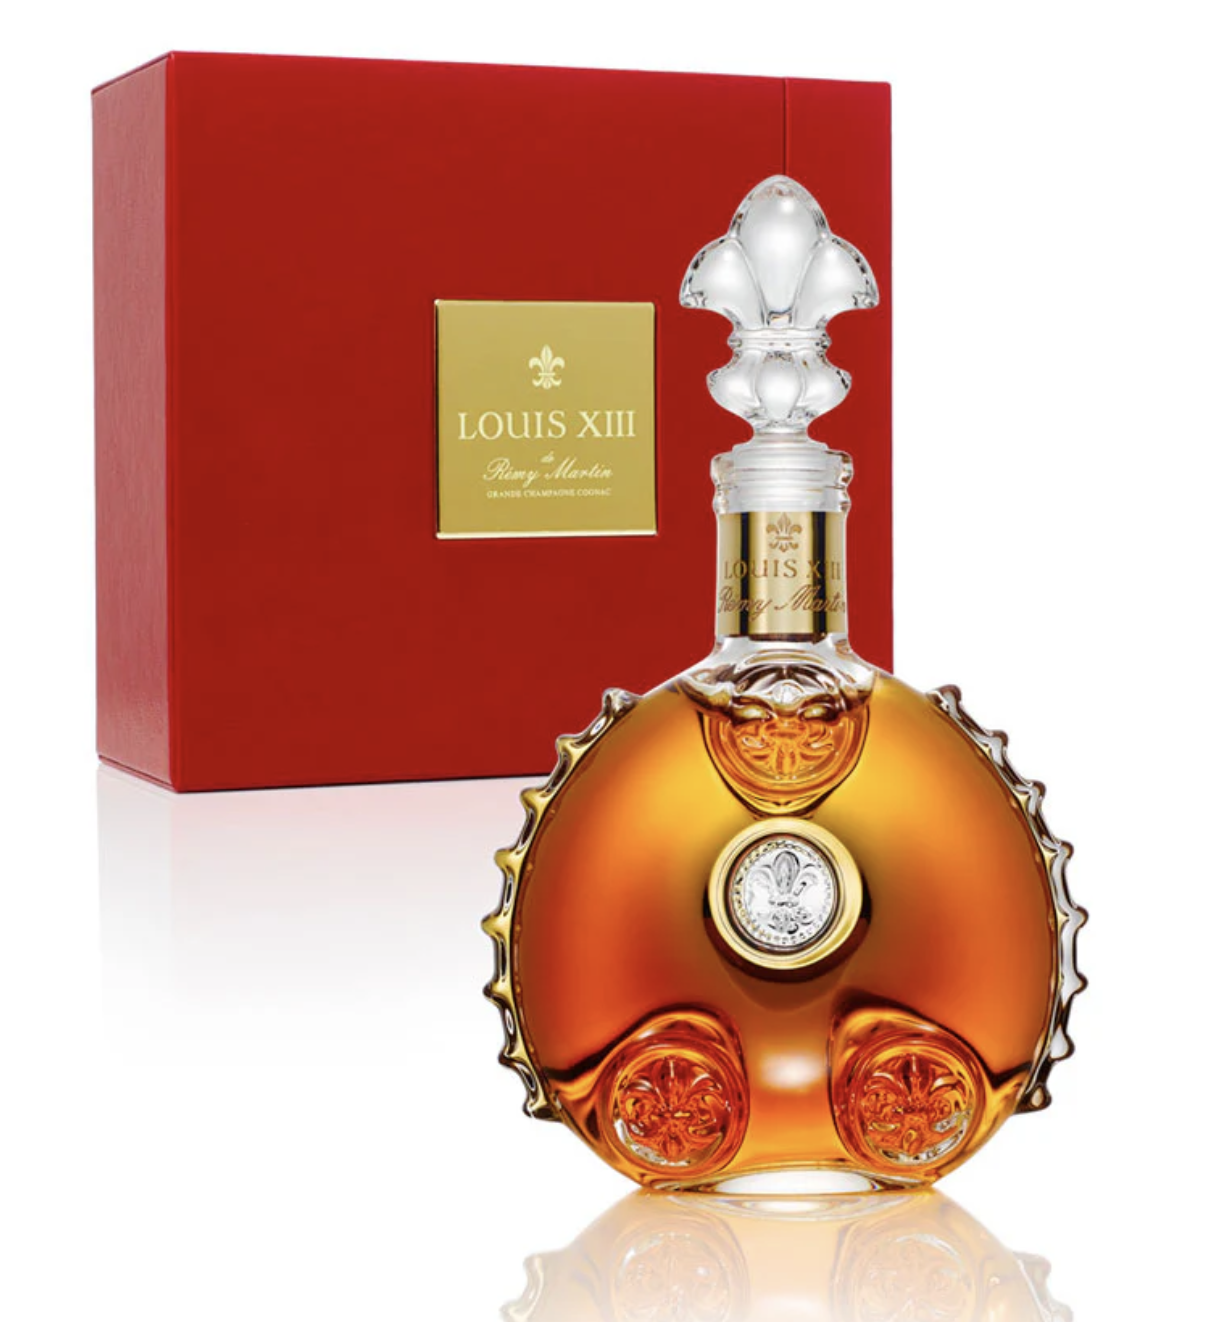 Louis XIII de Rémy Martin: The Pinnacle of Fine Cognac